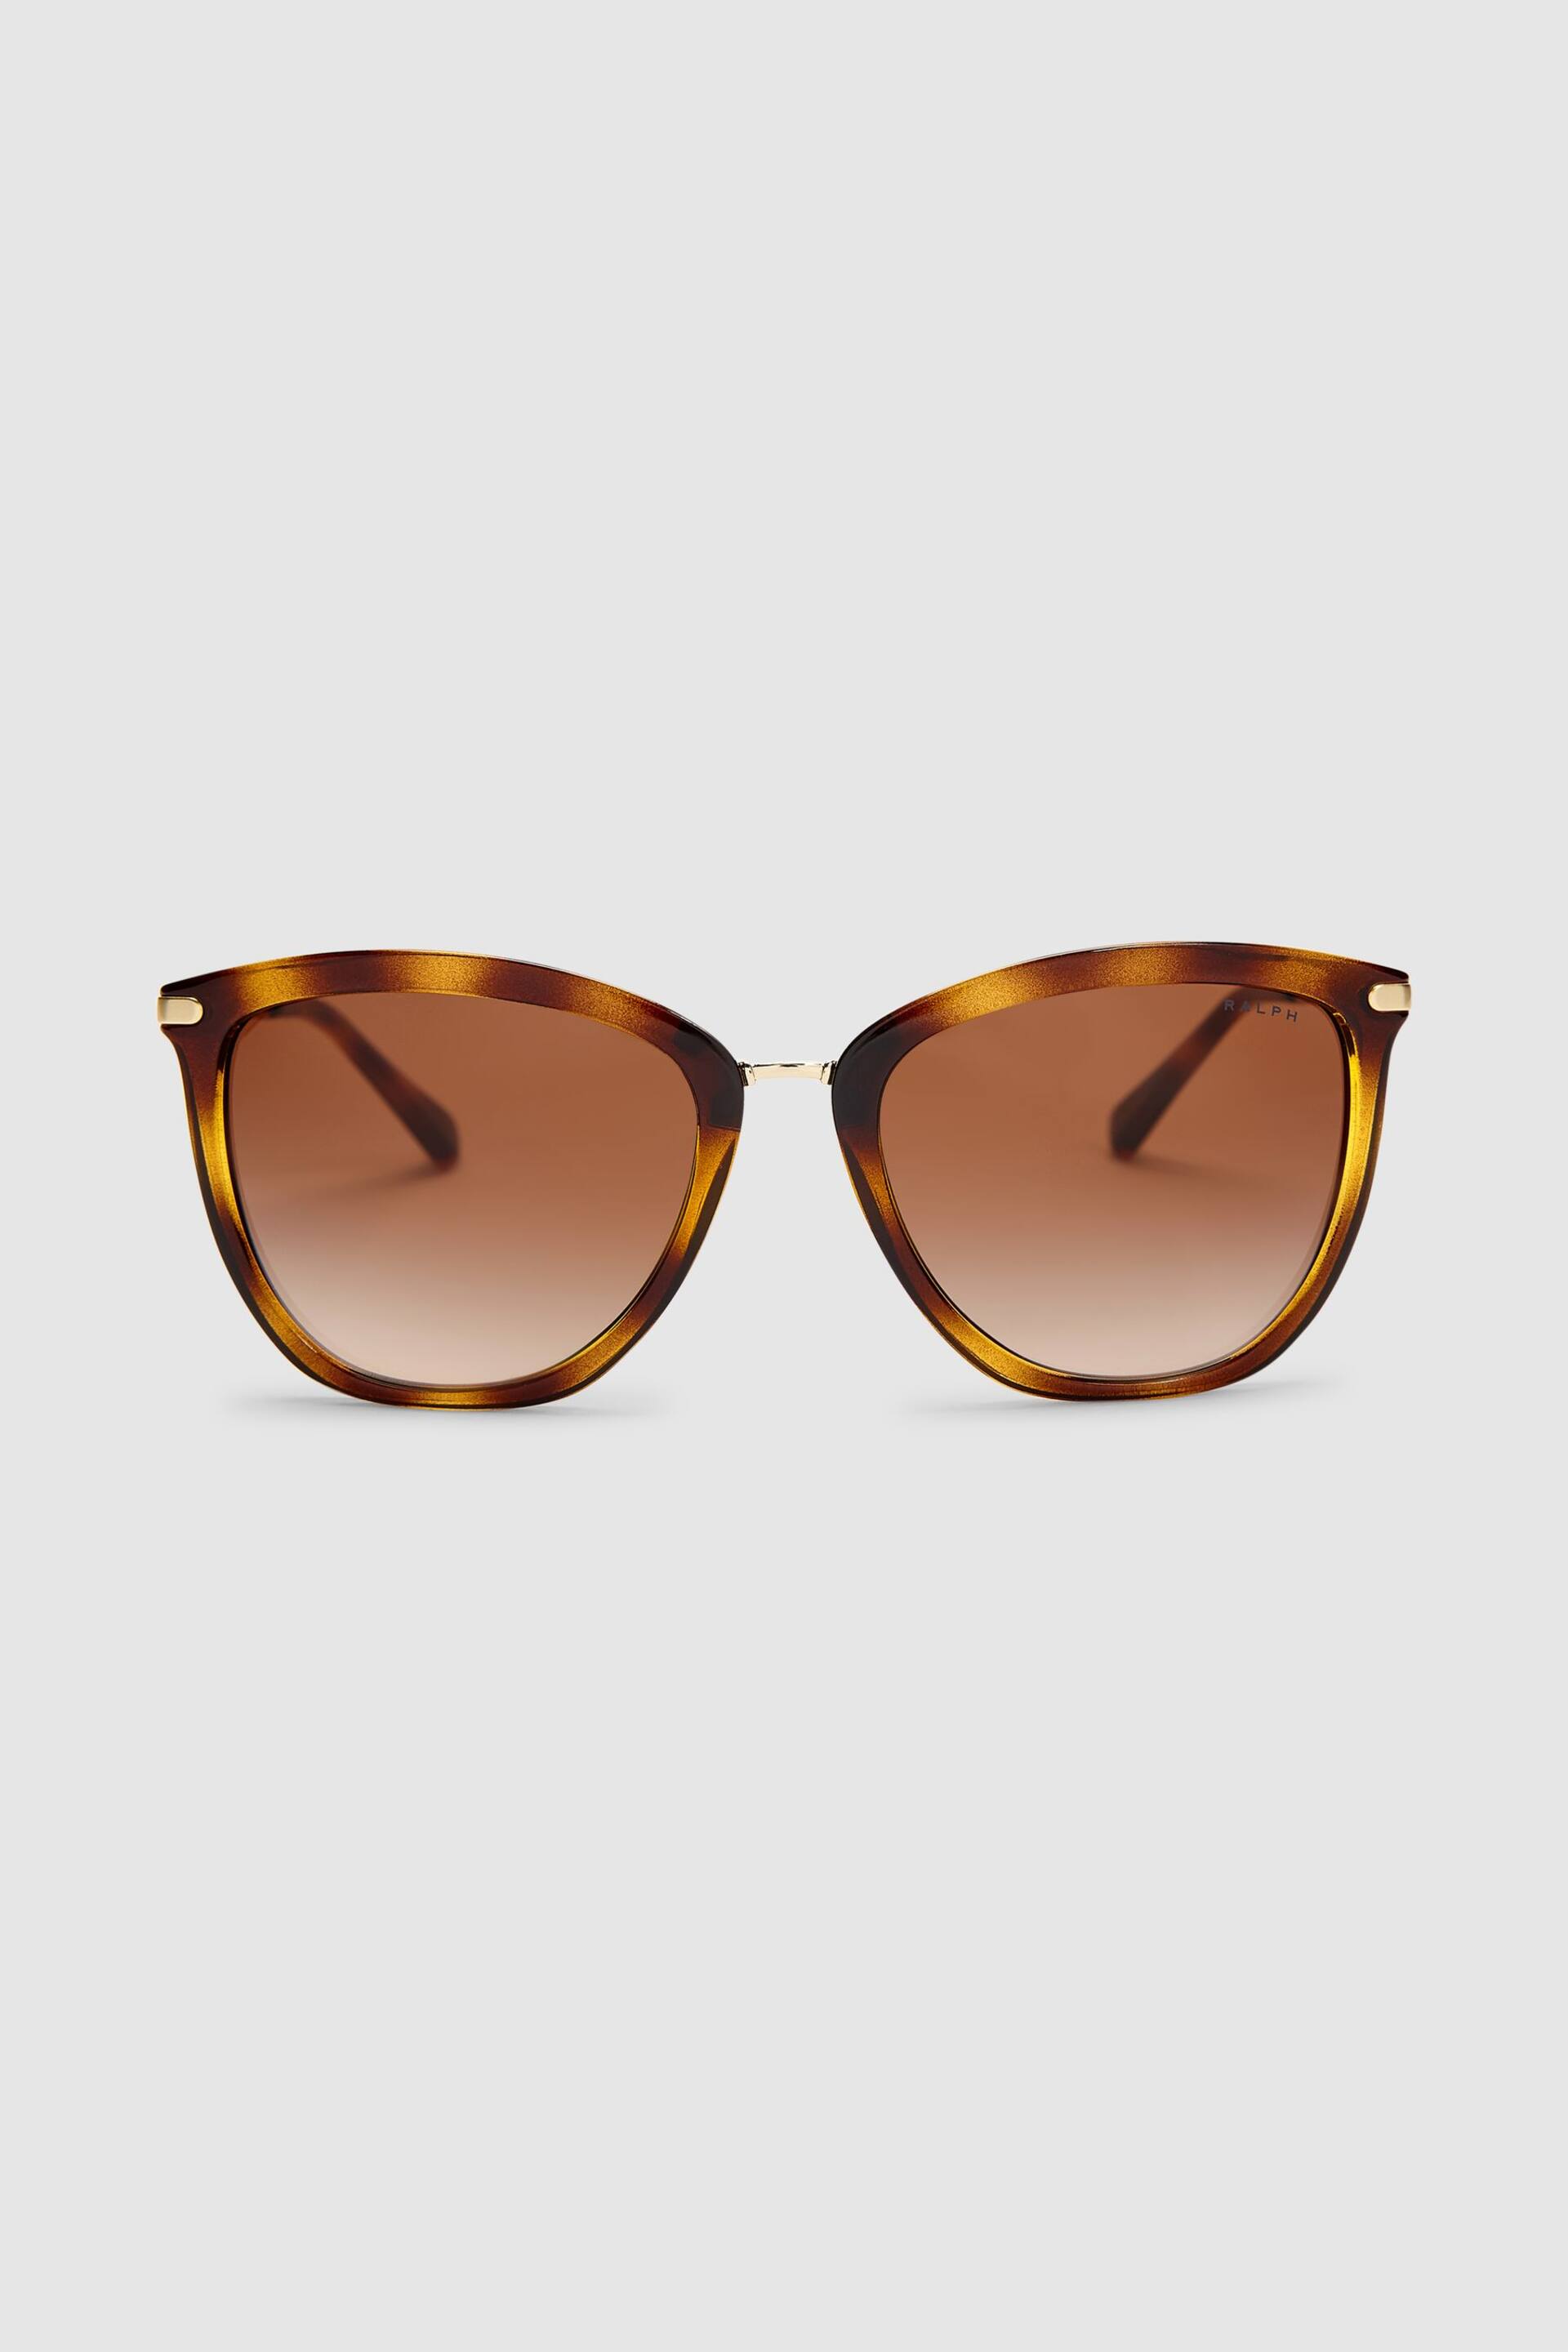 Ralph by Ralph Lauren Tortoiseshell Effect Gold Arm Sunglasses - Image 2 of 4